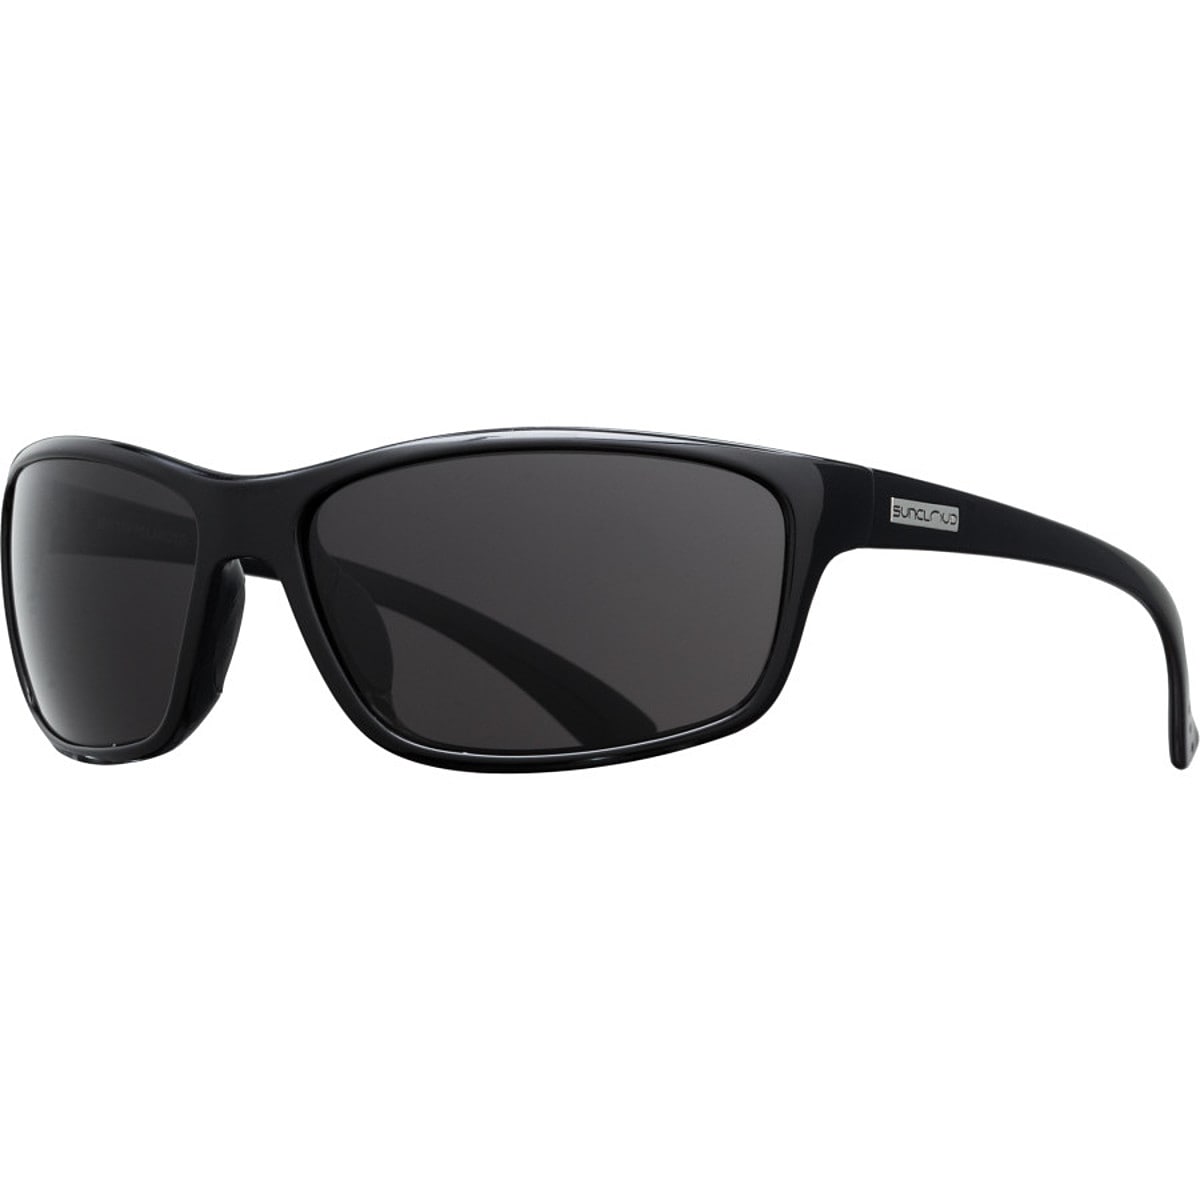 Sentry Polarized Sunglasses SunCloud Polarized Optics